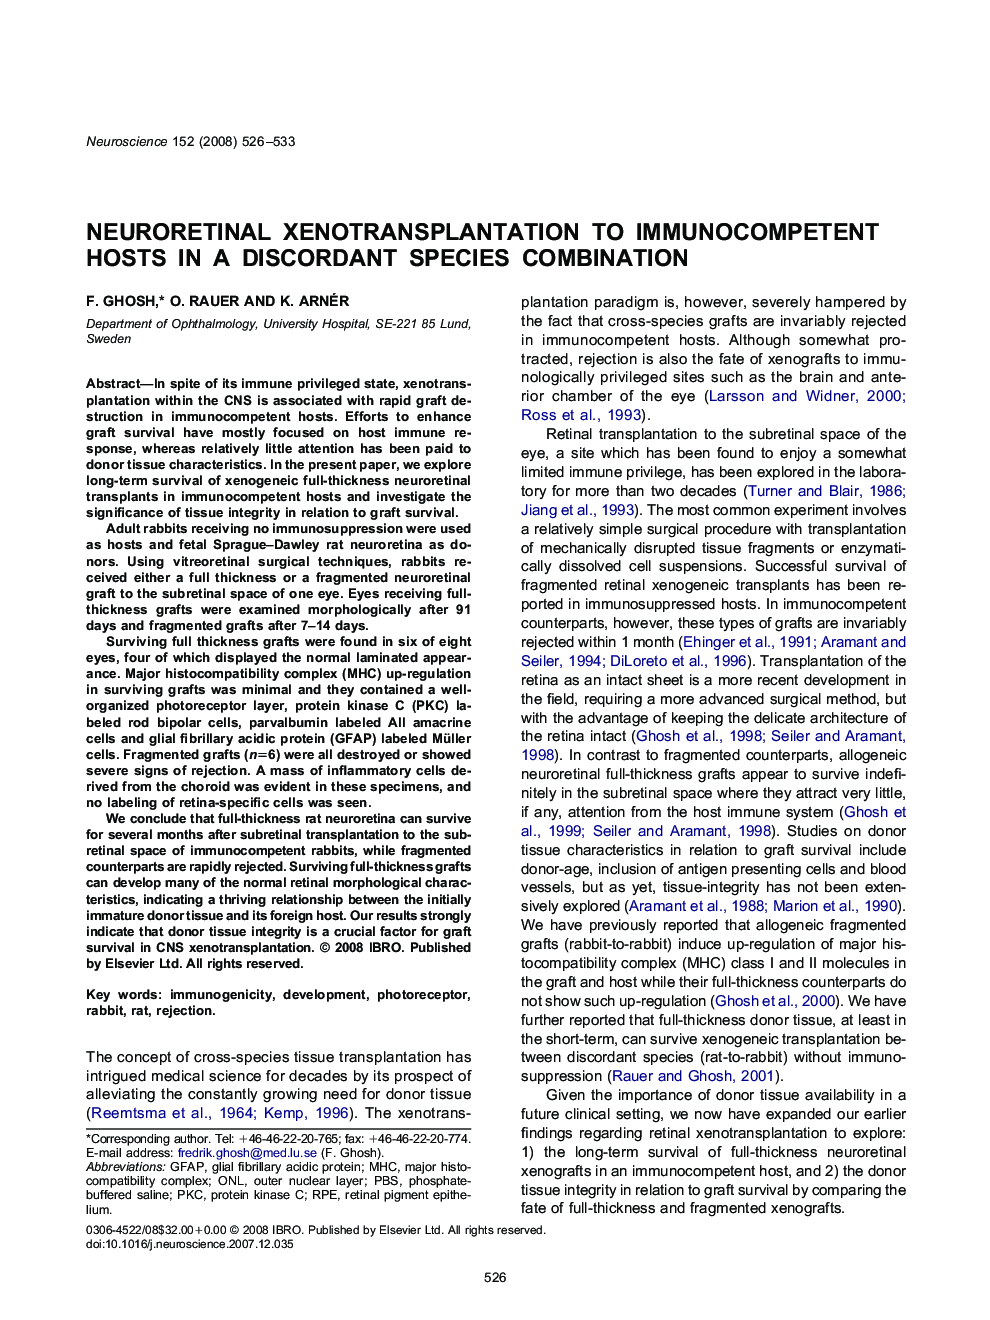 Neuroretinal xenotransplantation to immunocompetent hosts in a discordant species combination